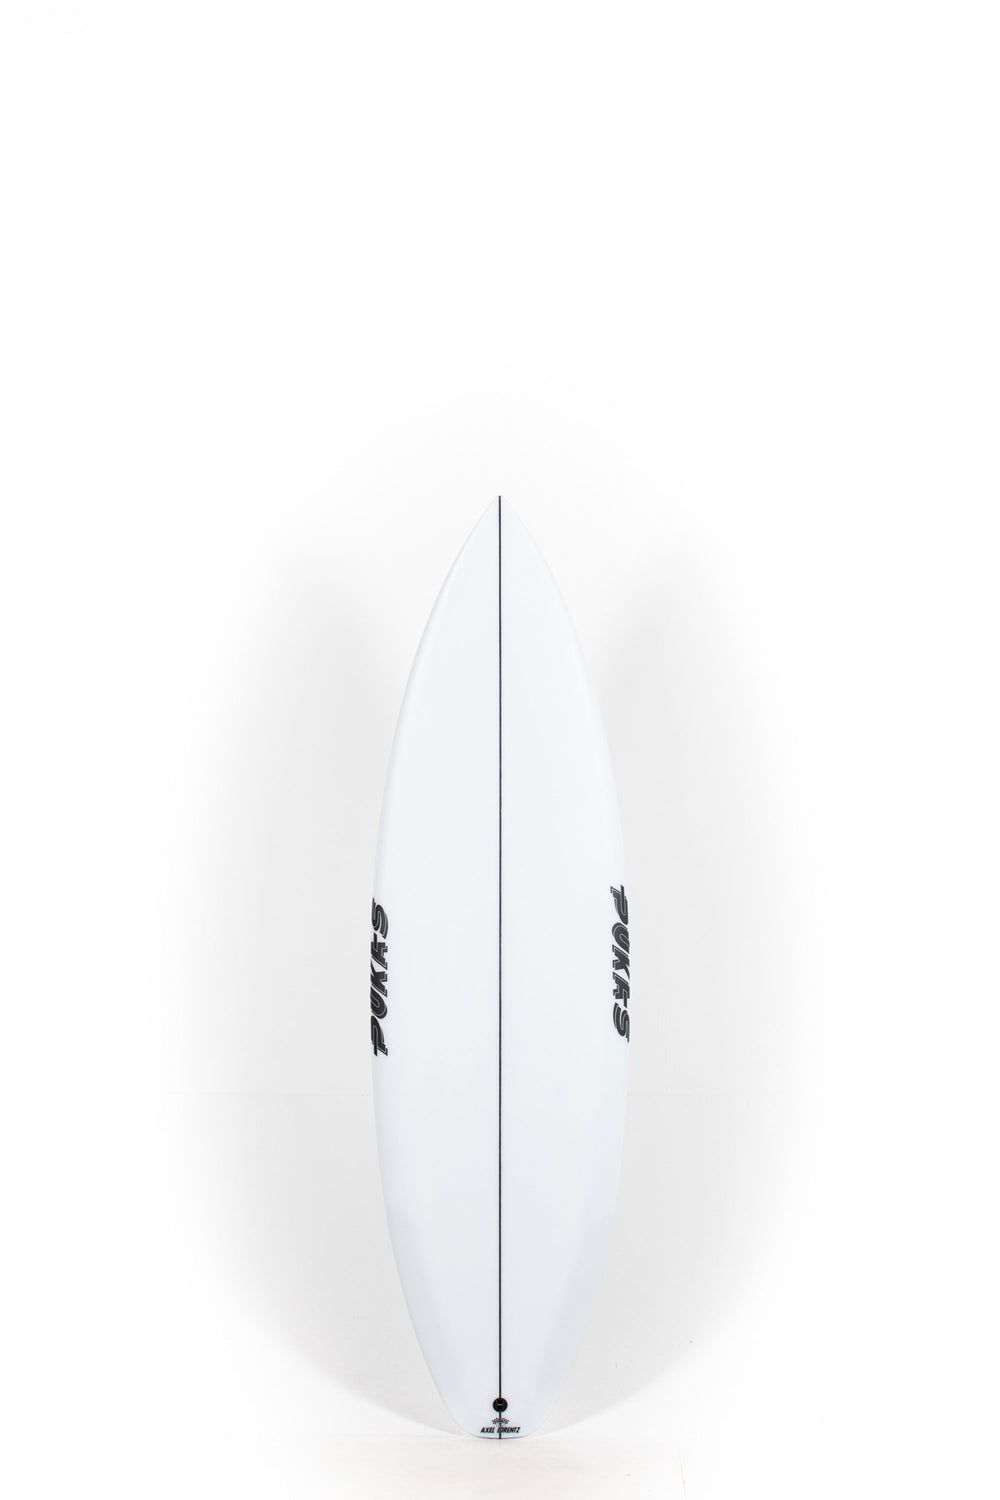 Pukas Surf Shop - Pukas Surfboard - TASTY TREAT ALL ROUND by Axel Lorentz - 5'9